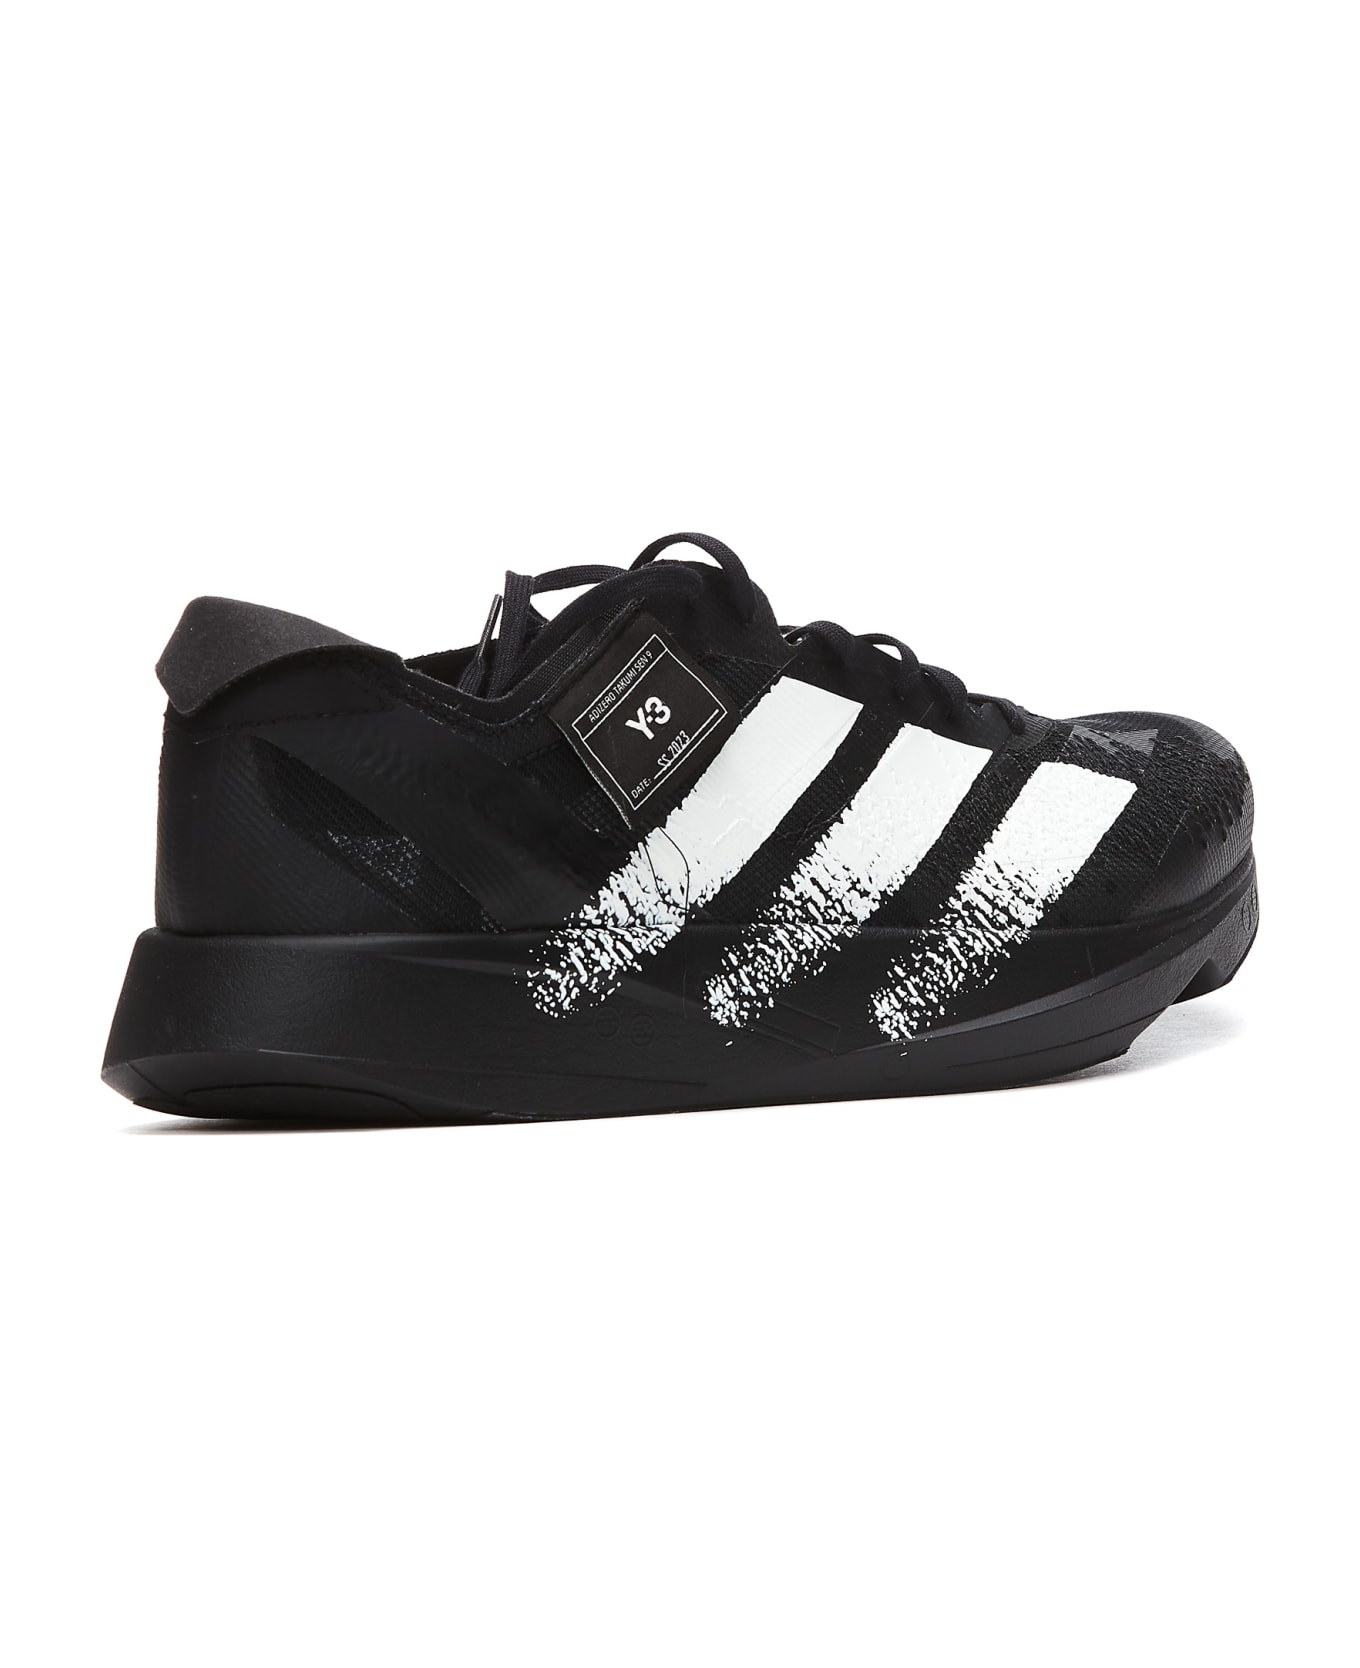 Y-3 Takumi Sen 9 Sneakers - black/white